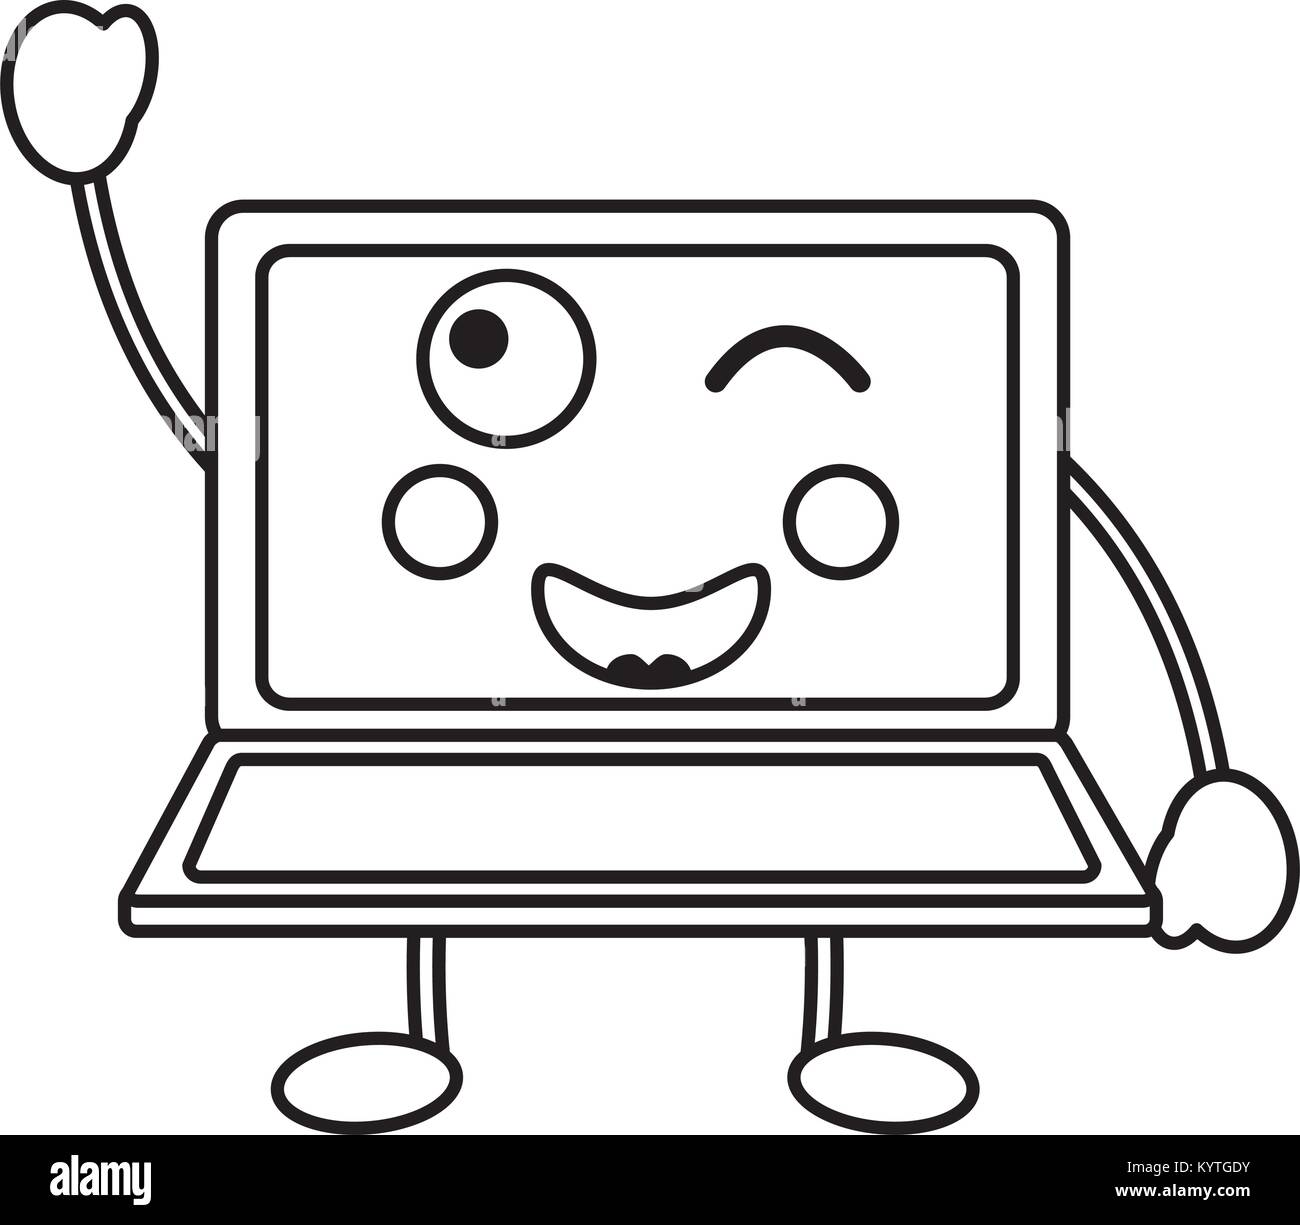 Kawaii Icon Laptop Cartoon Design Stock Photos & Kawaii Icon Laptop ...